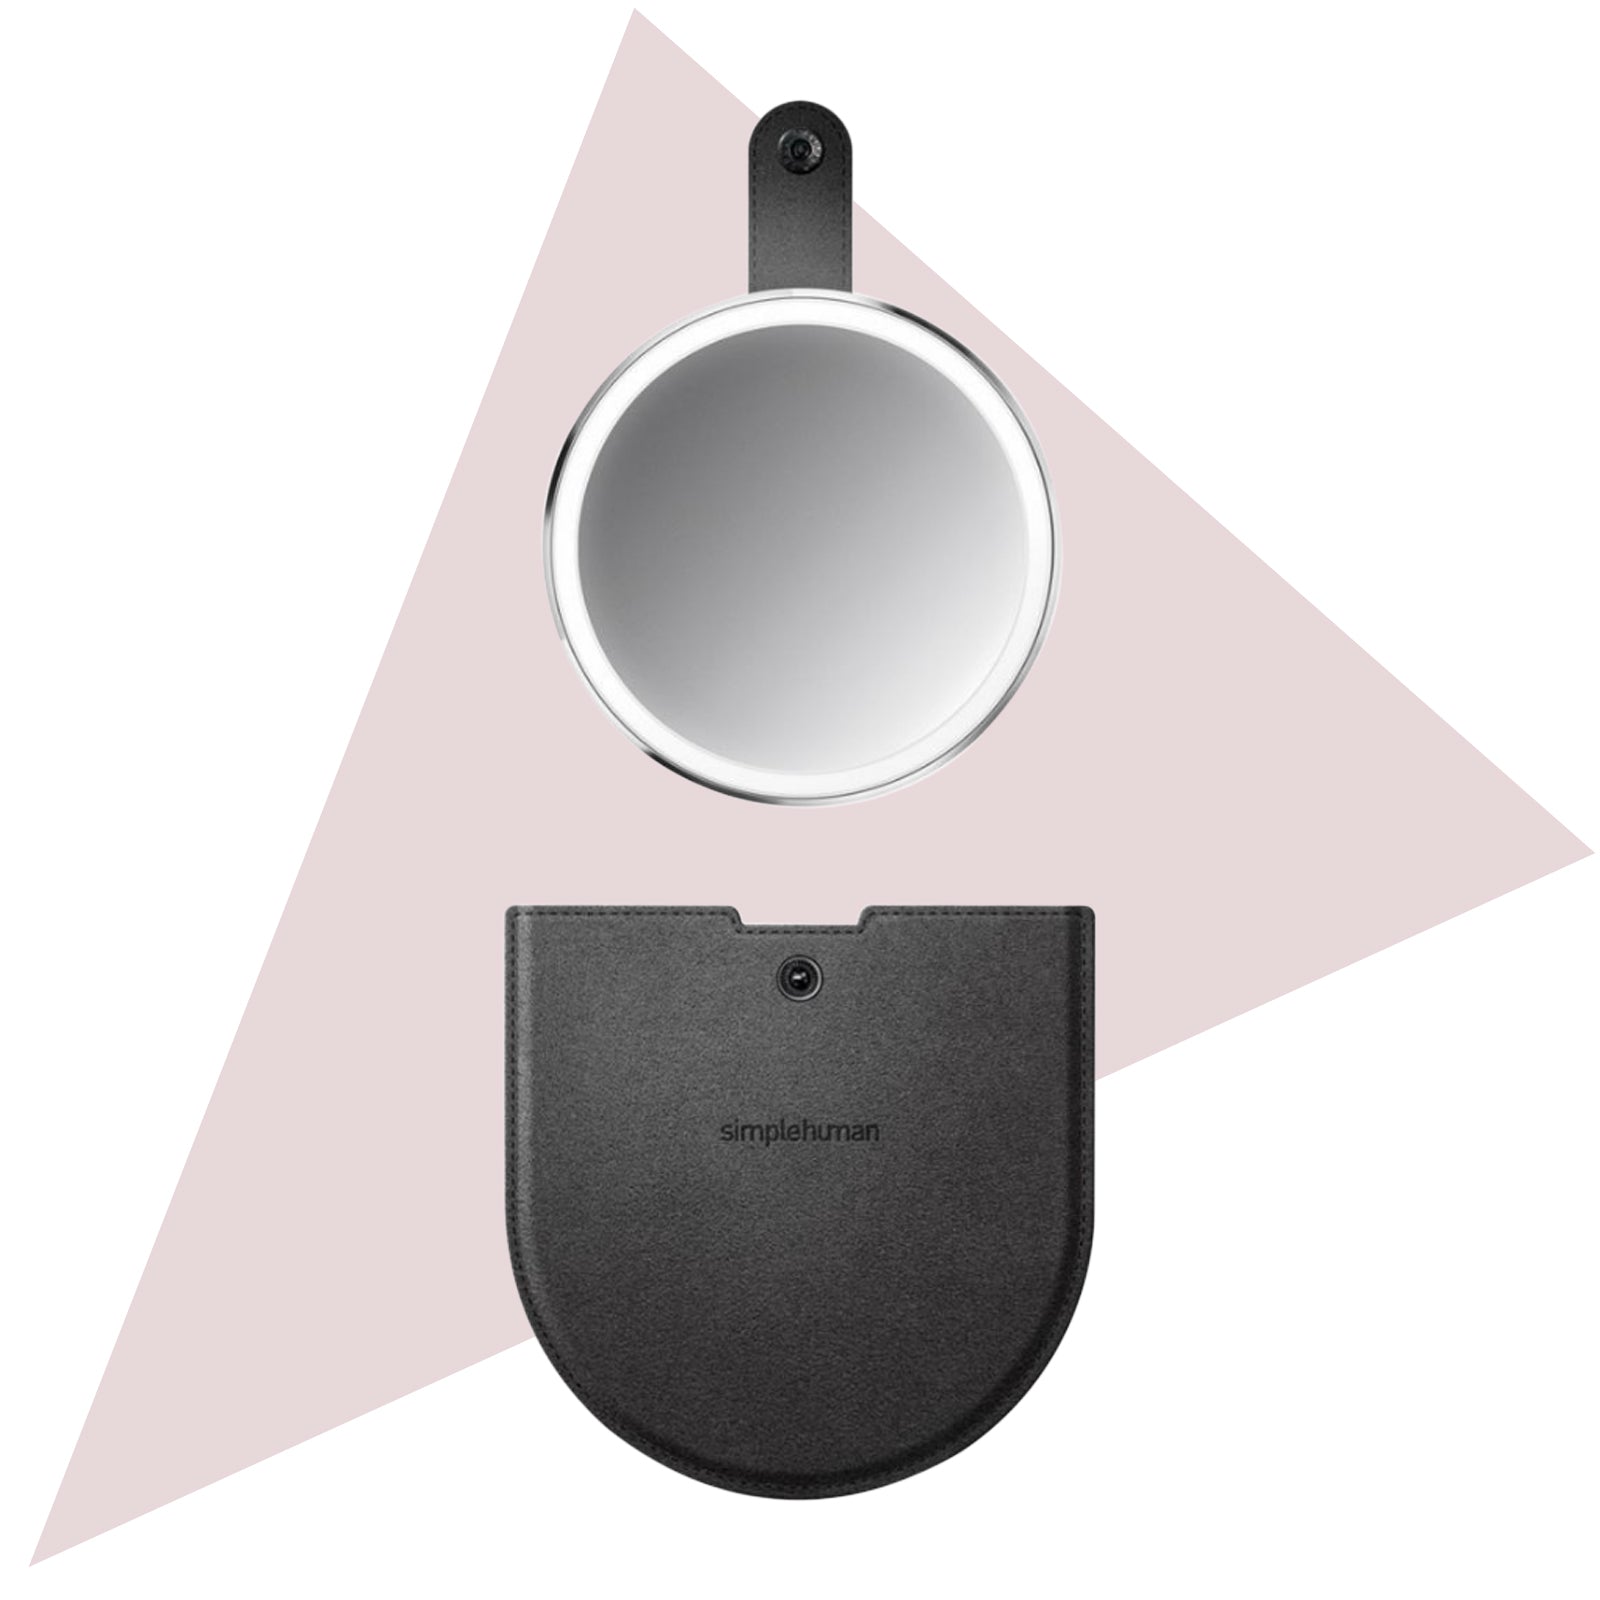 Simplehuman 4 inch Compact Sensor Mirror Silver 